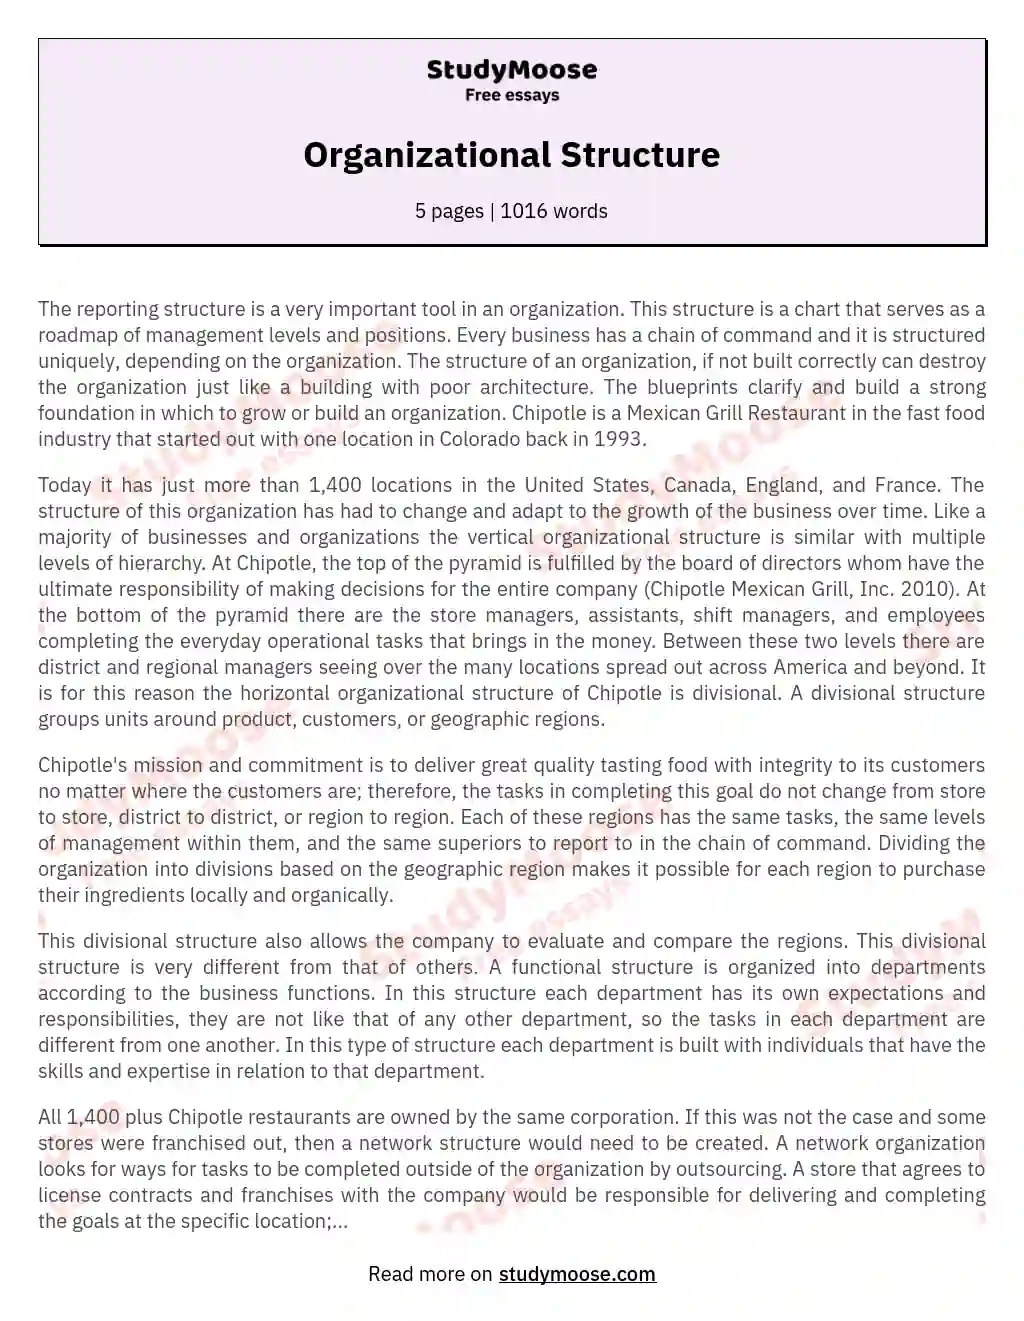 Organizational Structure essay